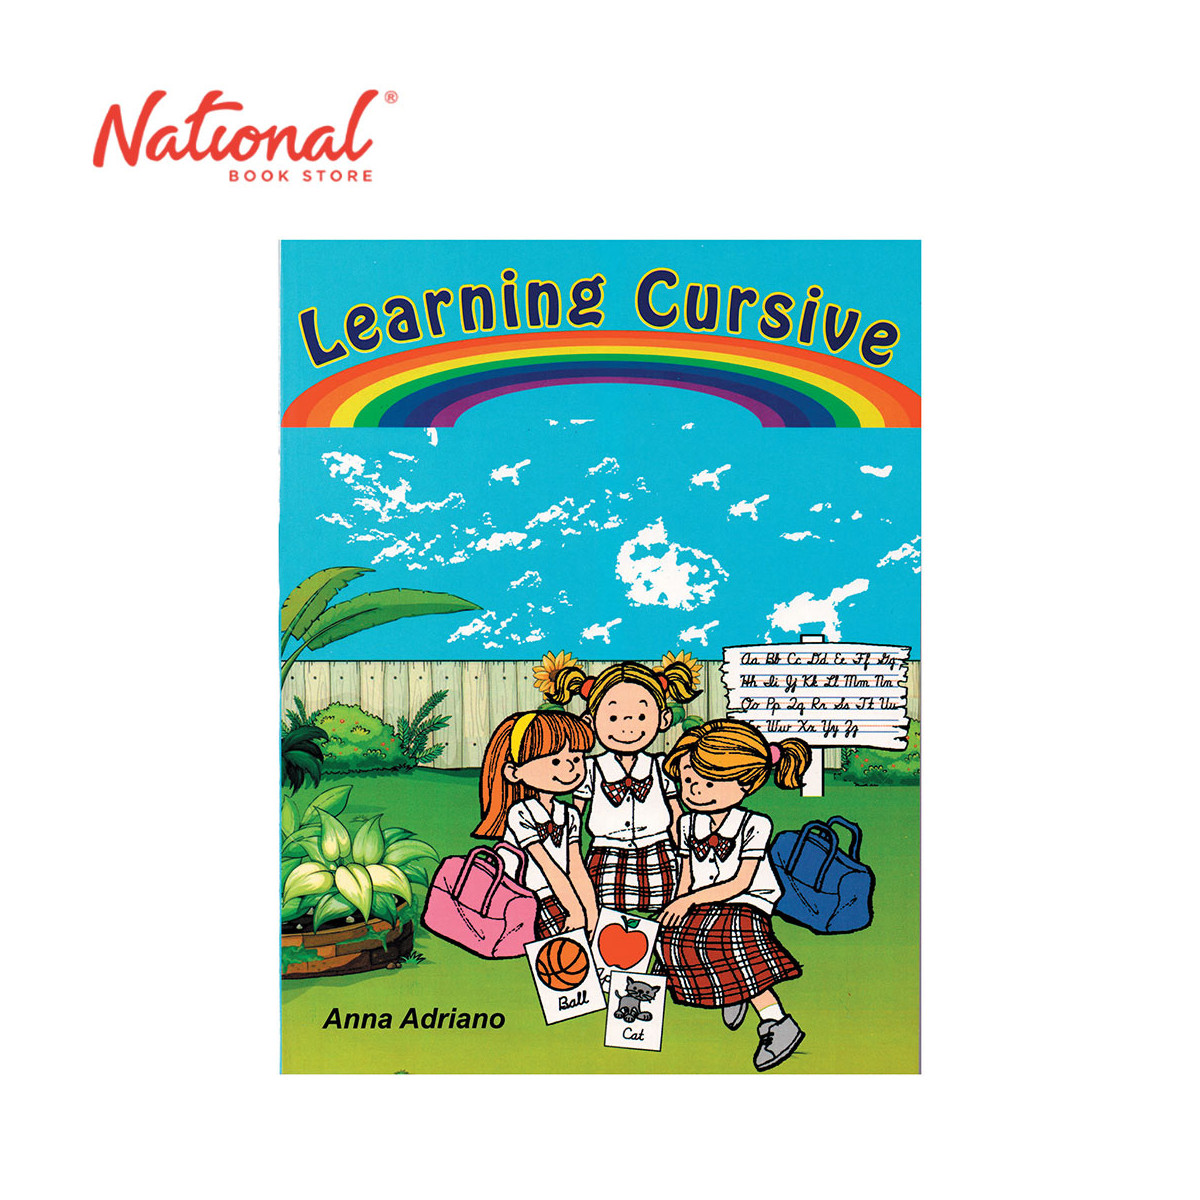 Learning Cursive by Anna Adriano - Trade Paperback - Preschool Books